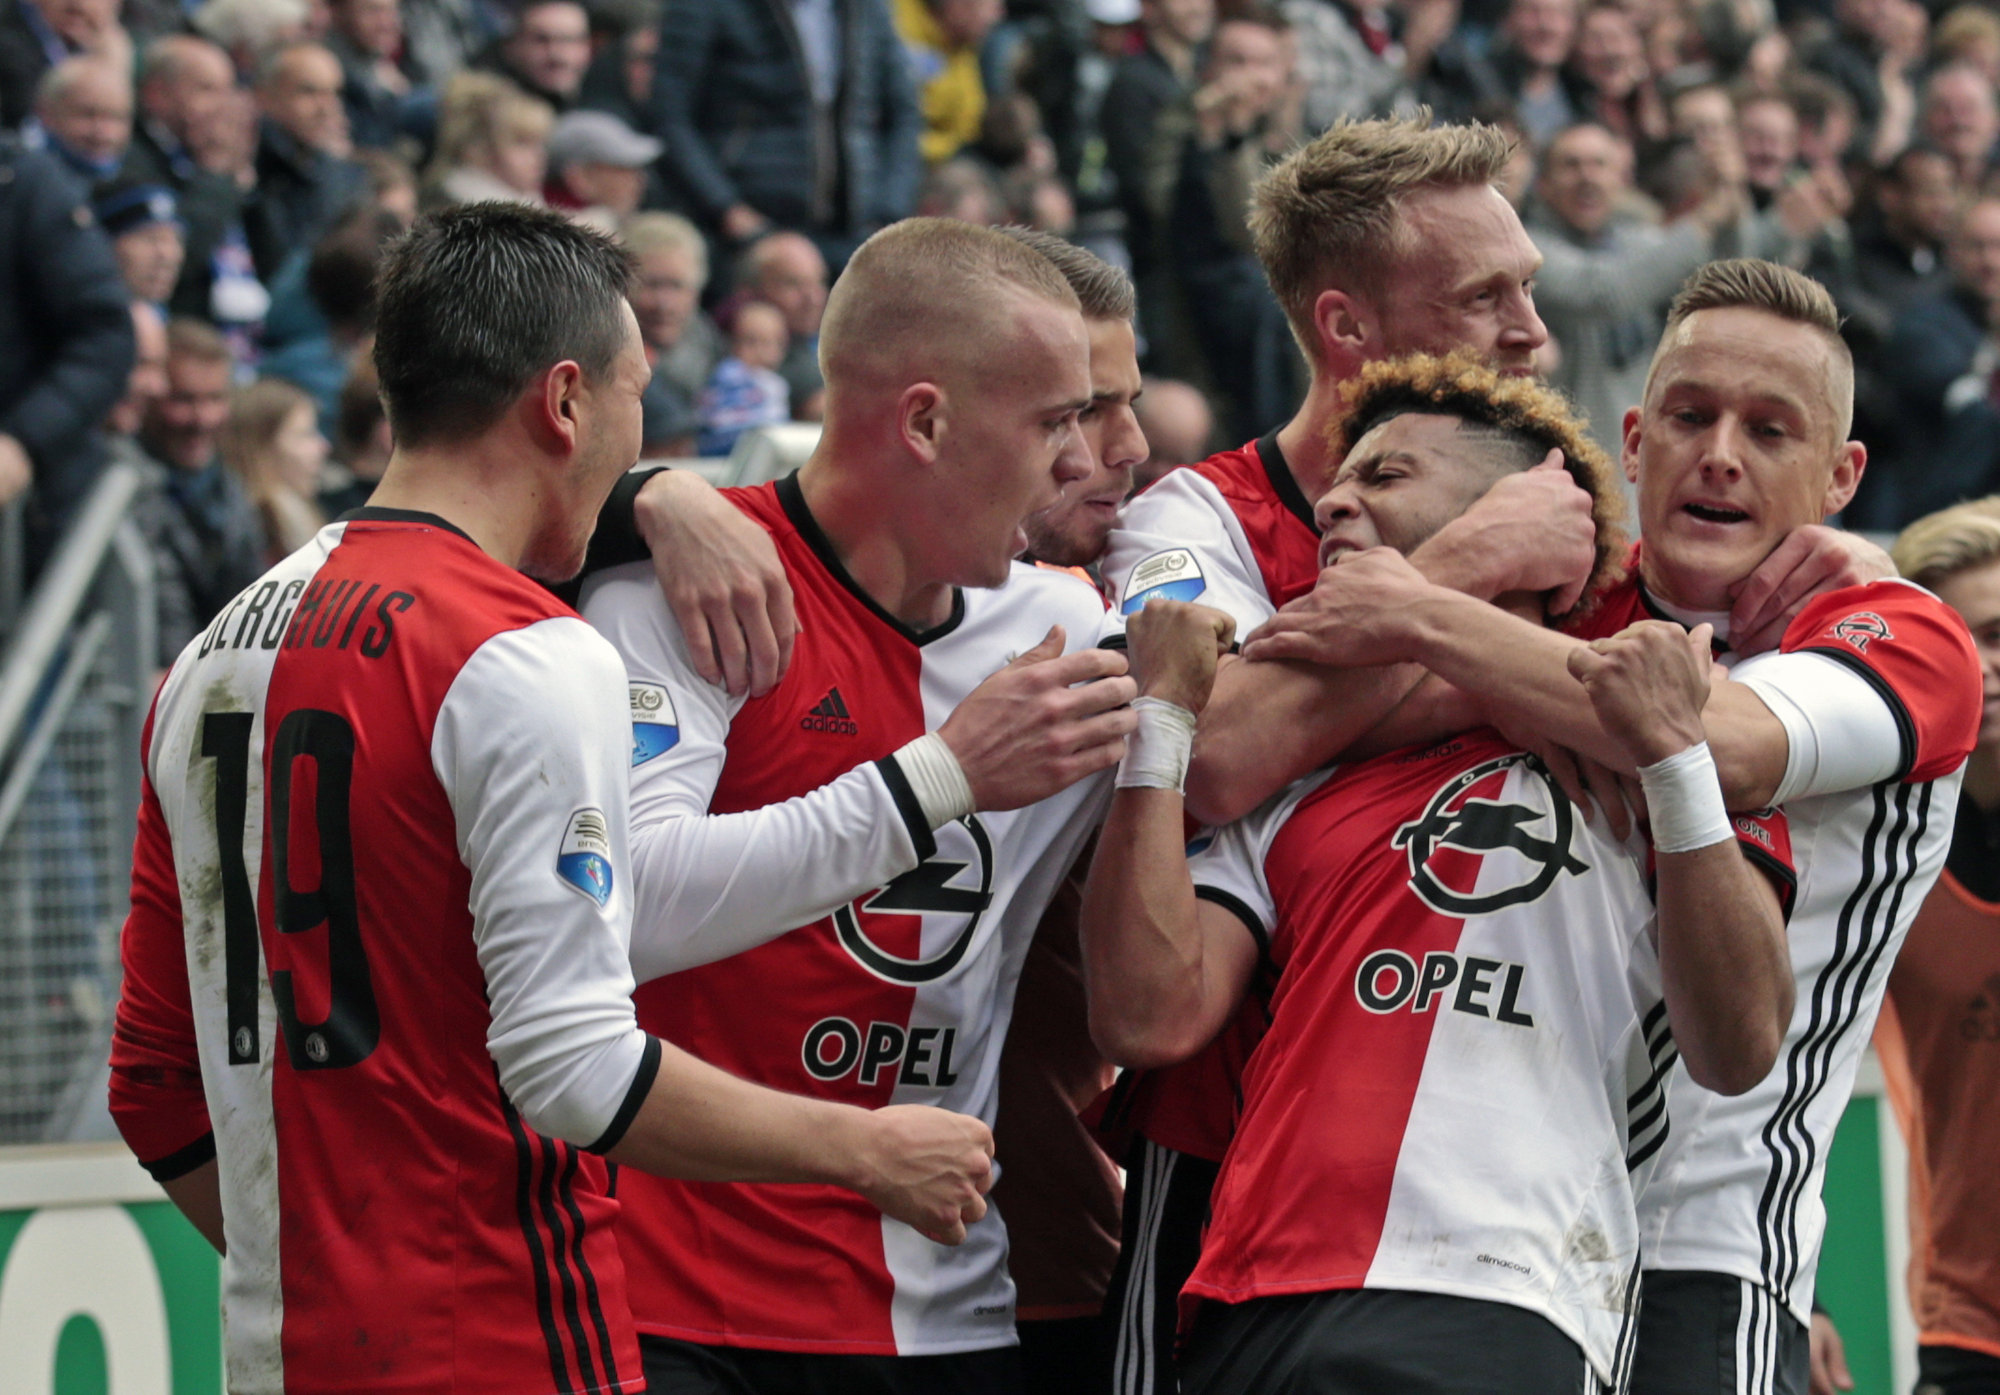 SC%20Heerenveen-Feyenoord-43